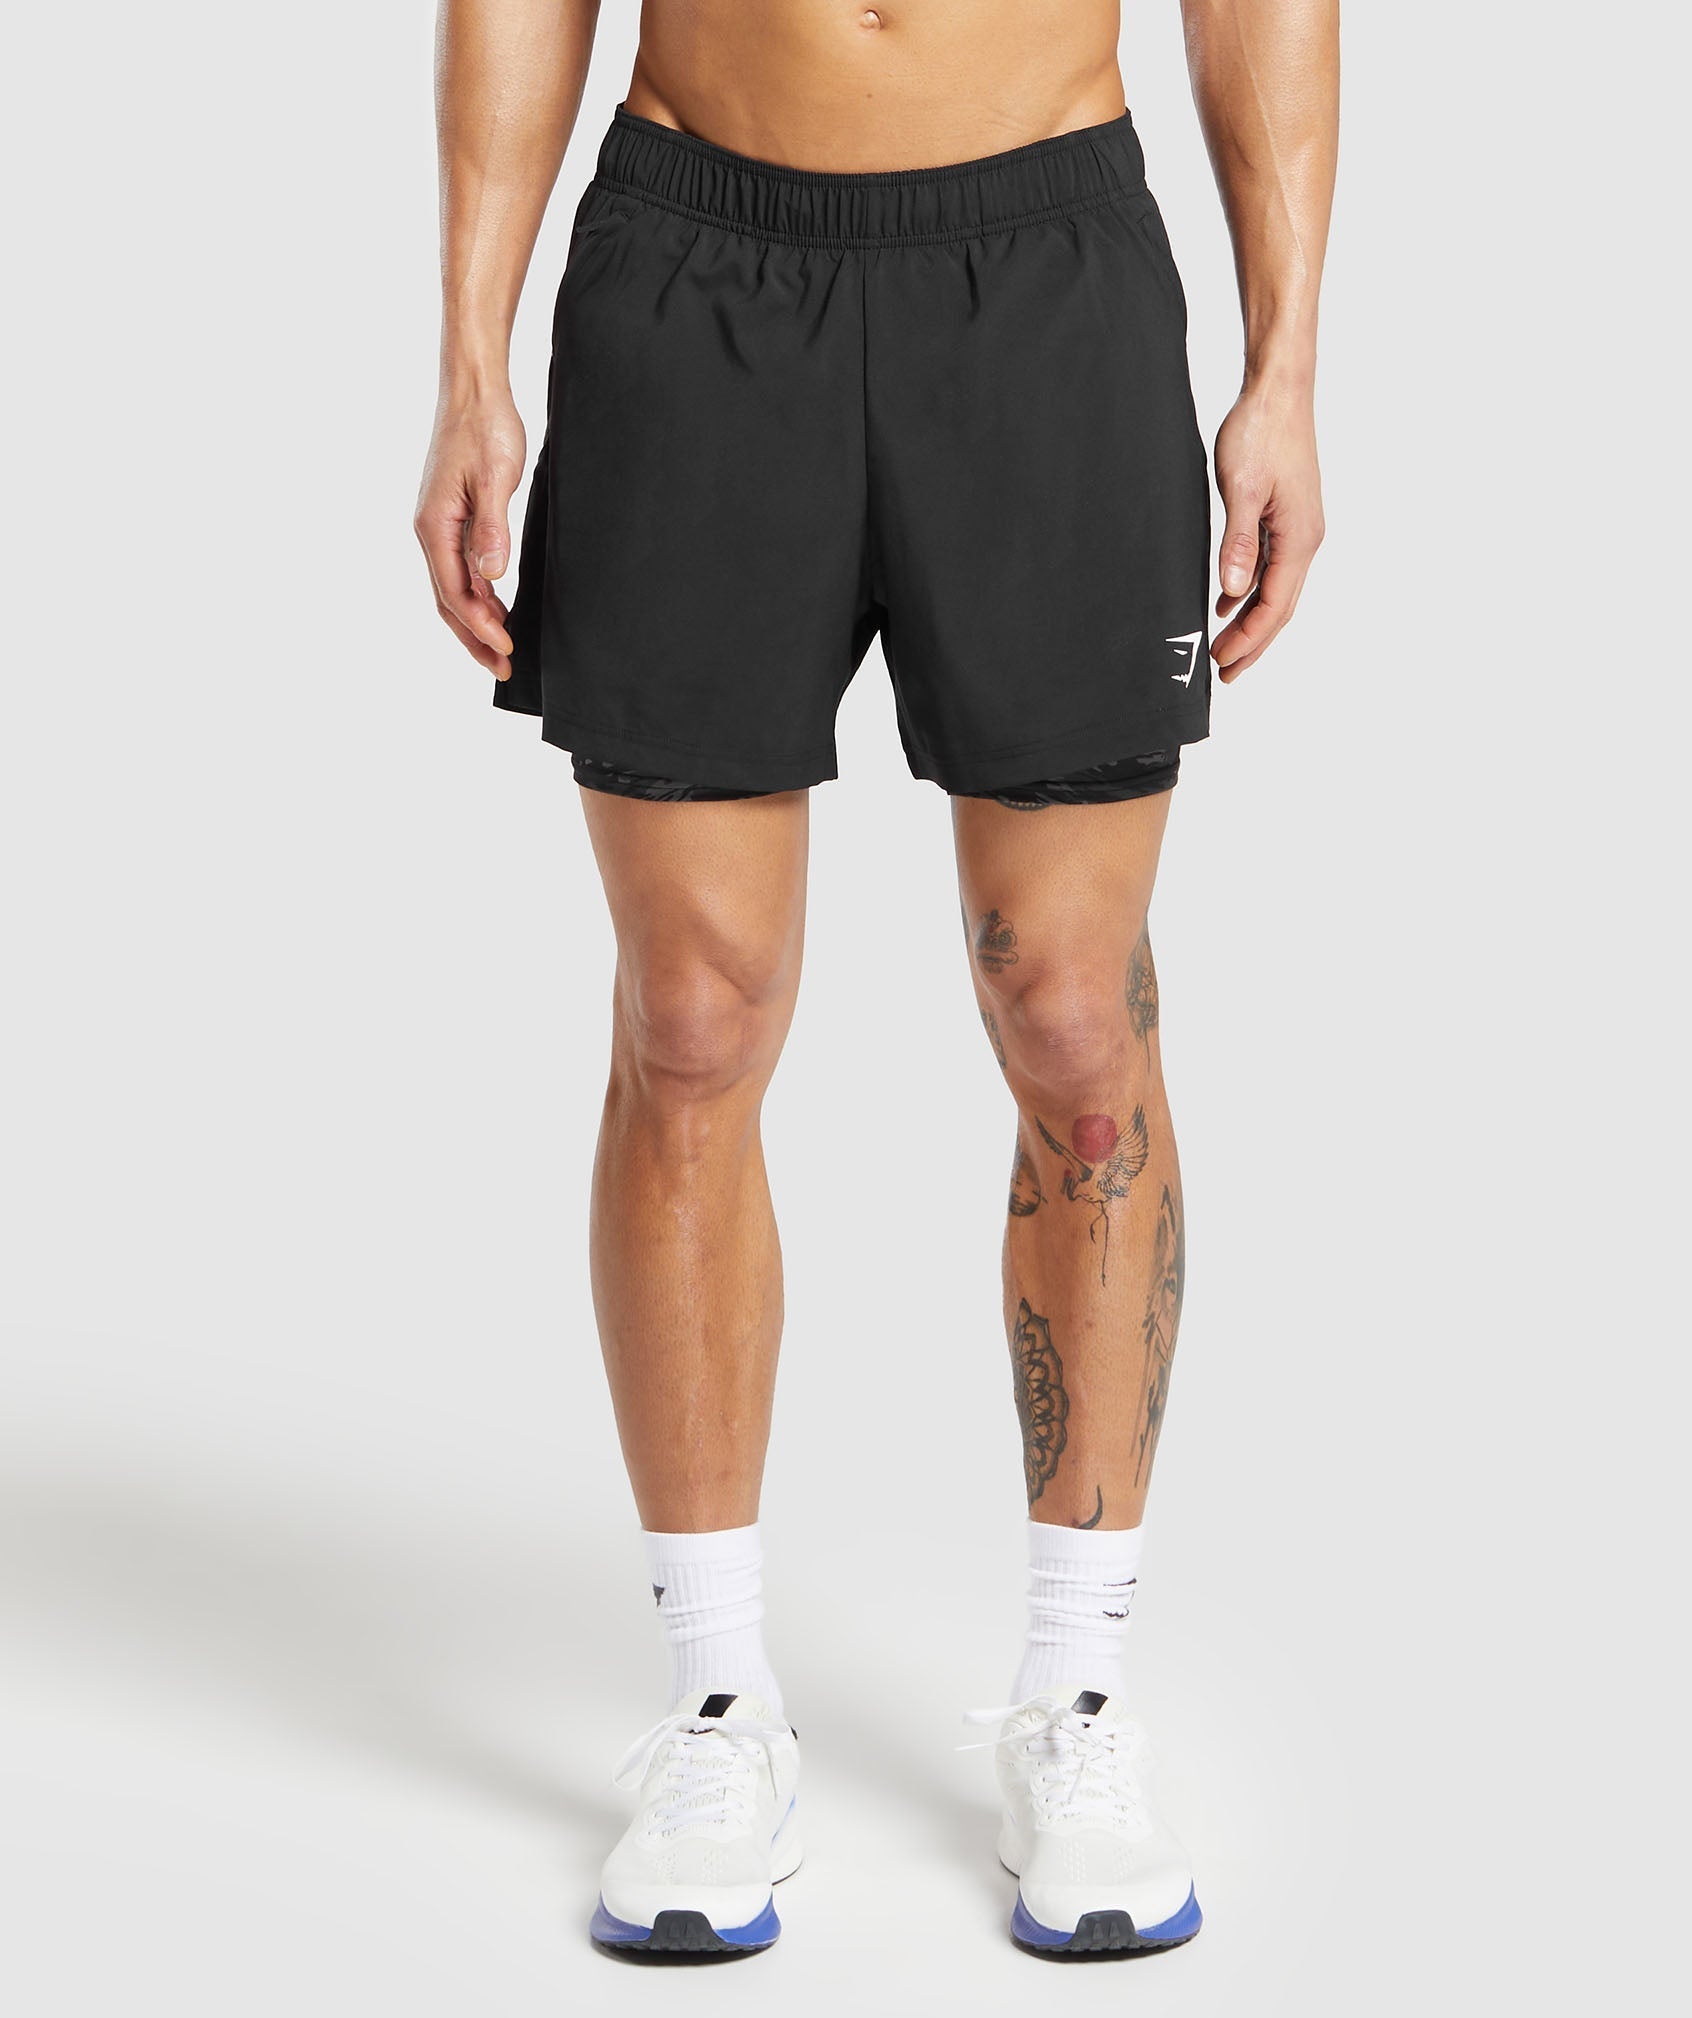 Sport  5" Shorts in Black/Asphalt Grey - view 1